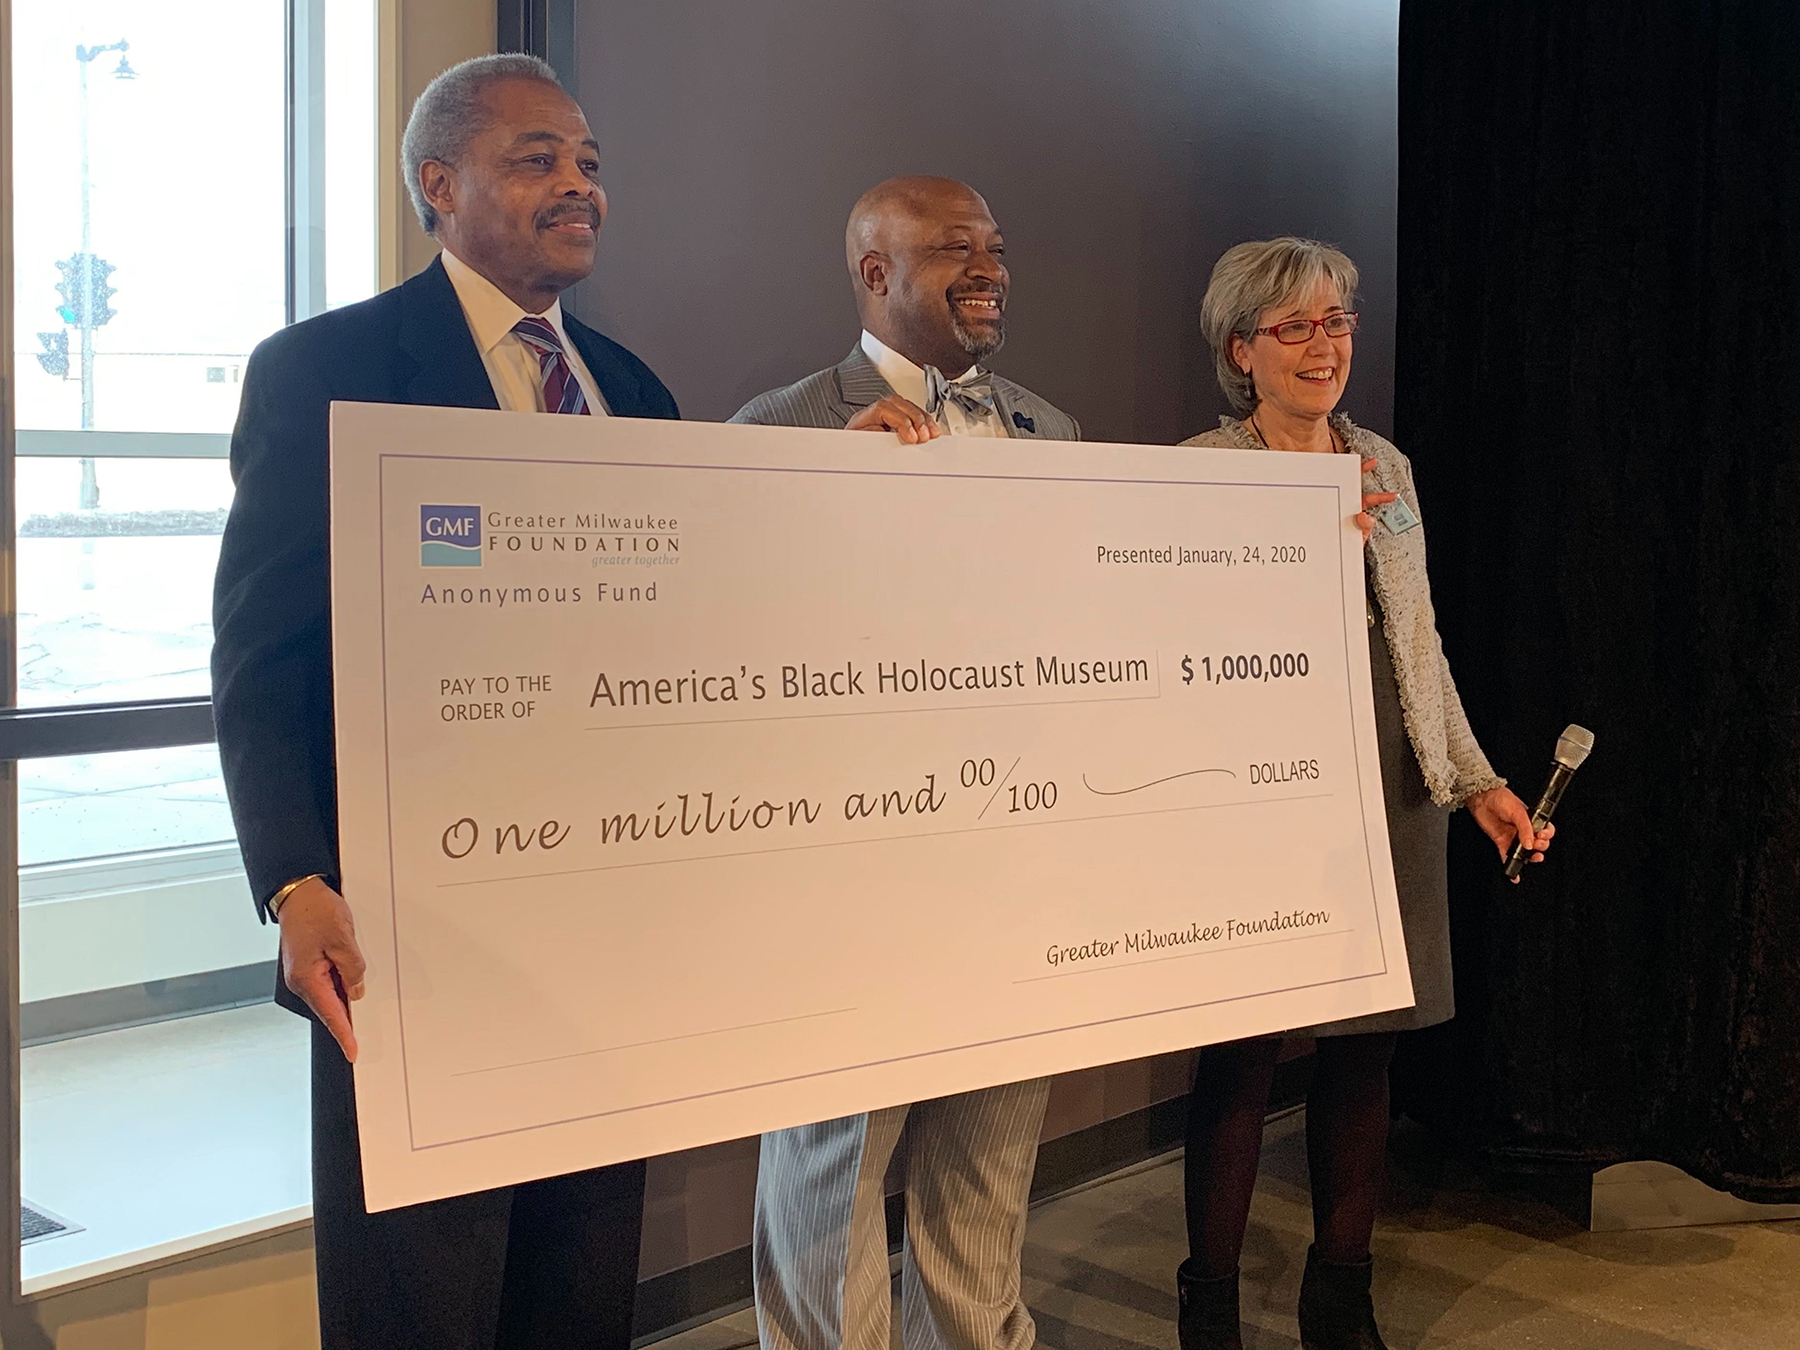 A grant check presented to America's Black Holocaust Museum